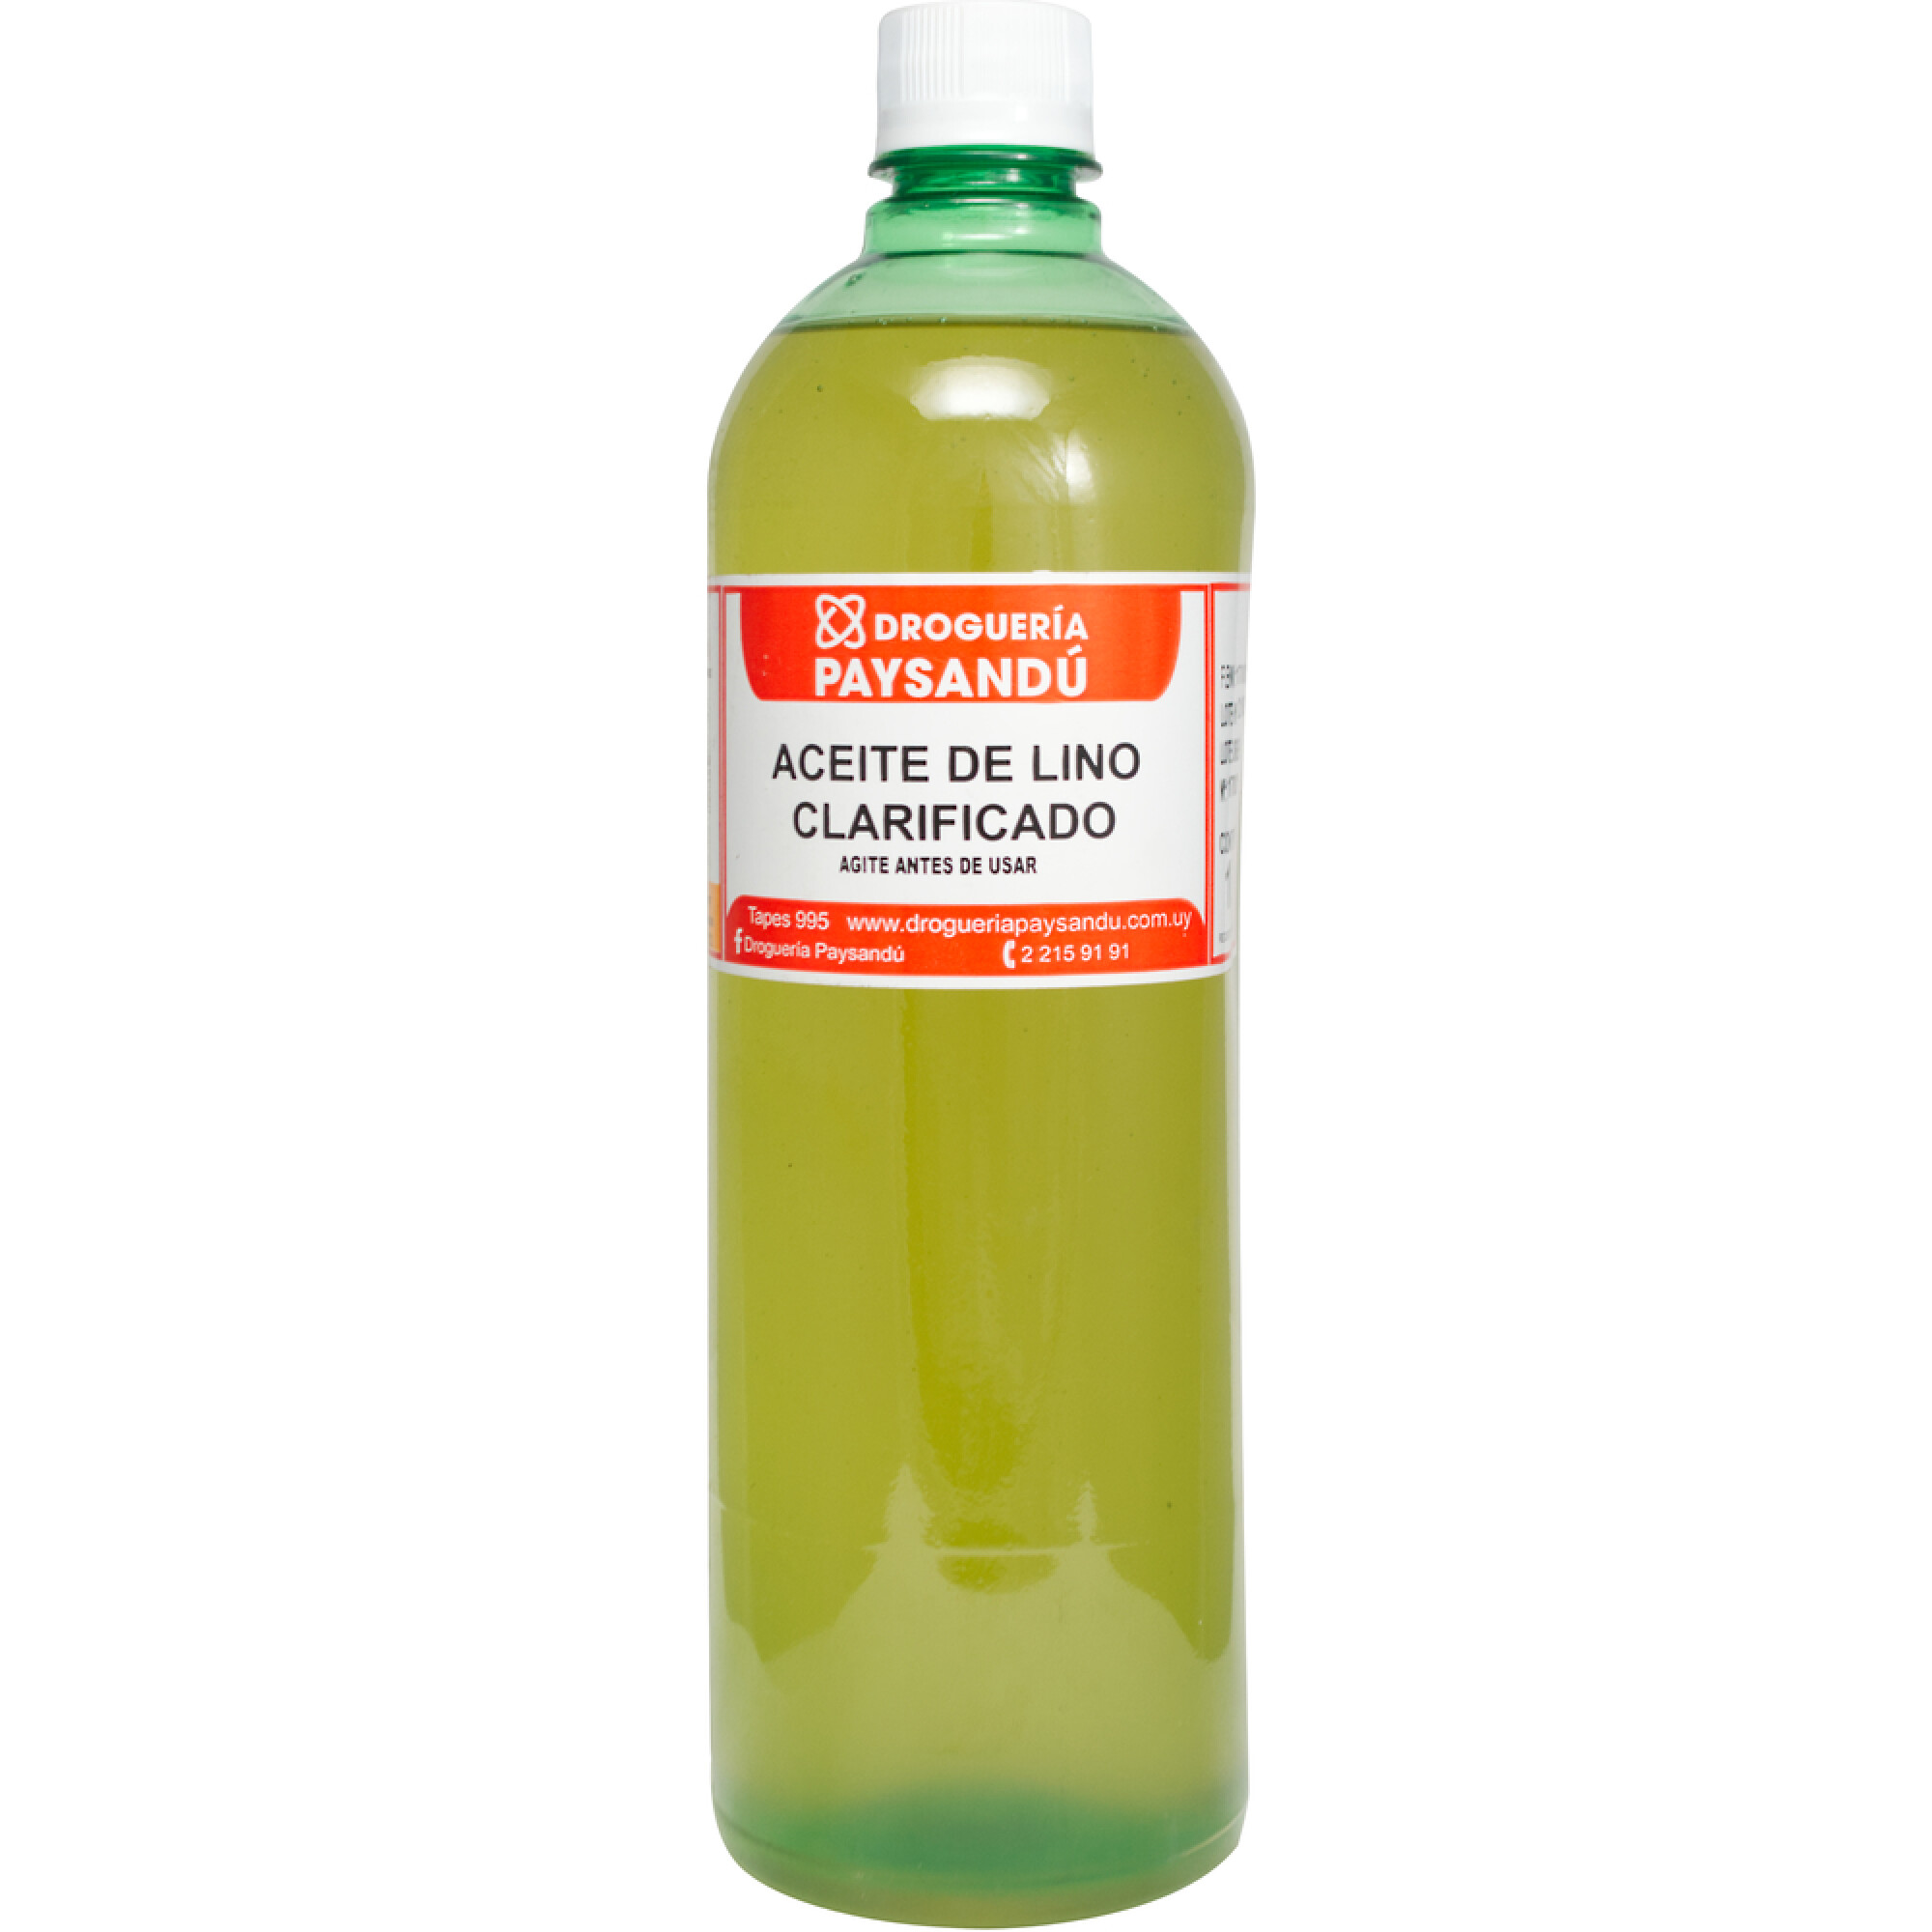 Aceite de Lino Clarificado - 1 L — Droguería Paysandú